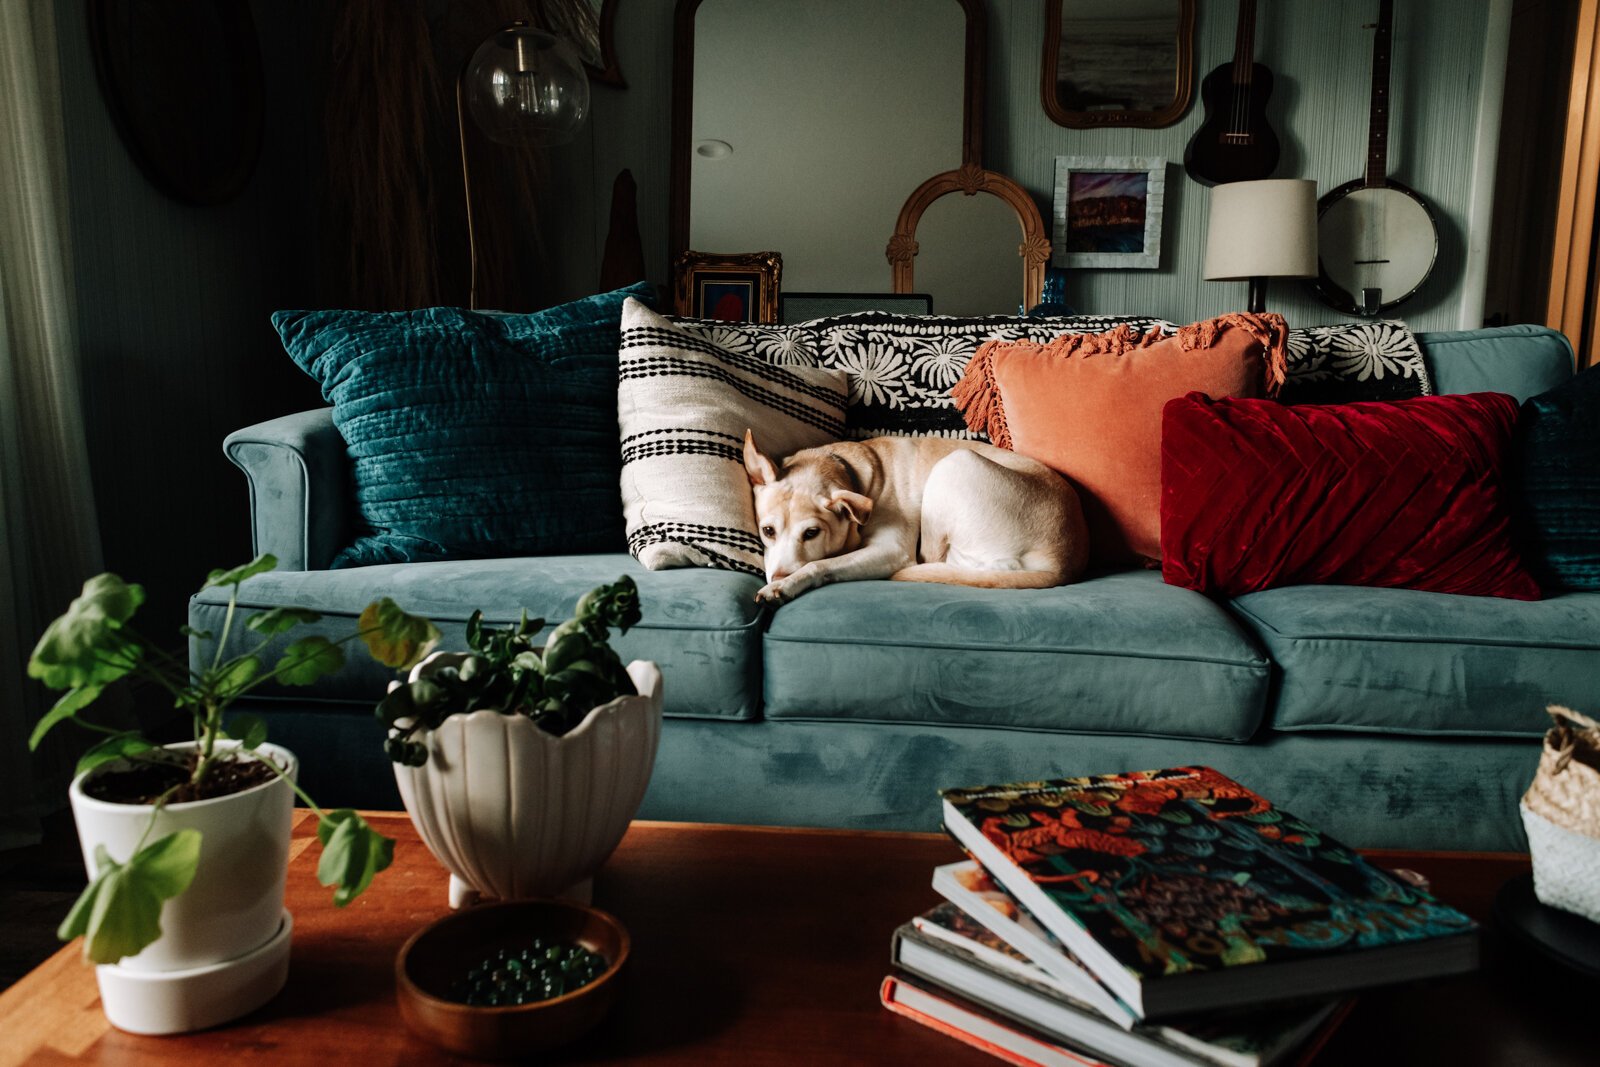 Family dog Ladybird enjoys the light of the living room.